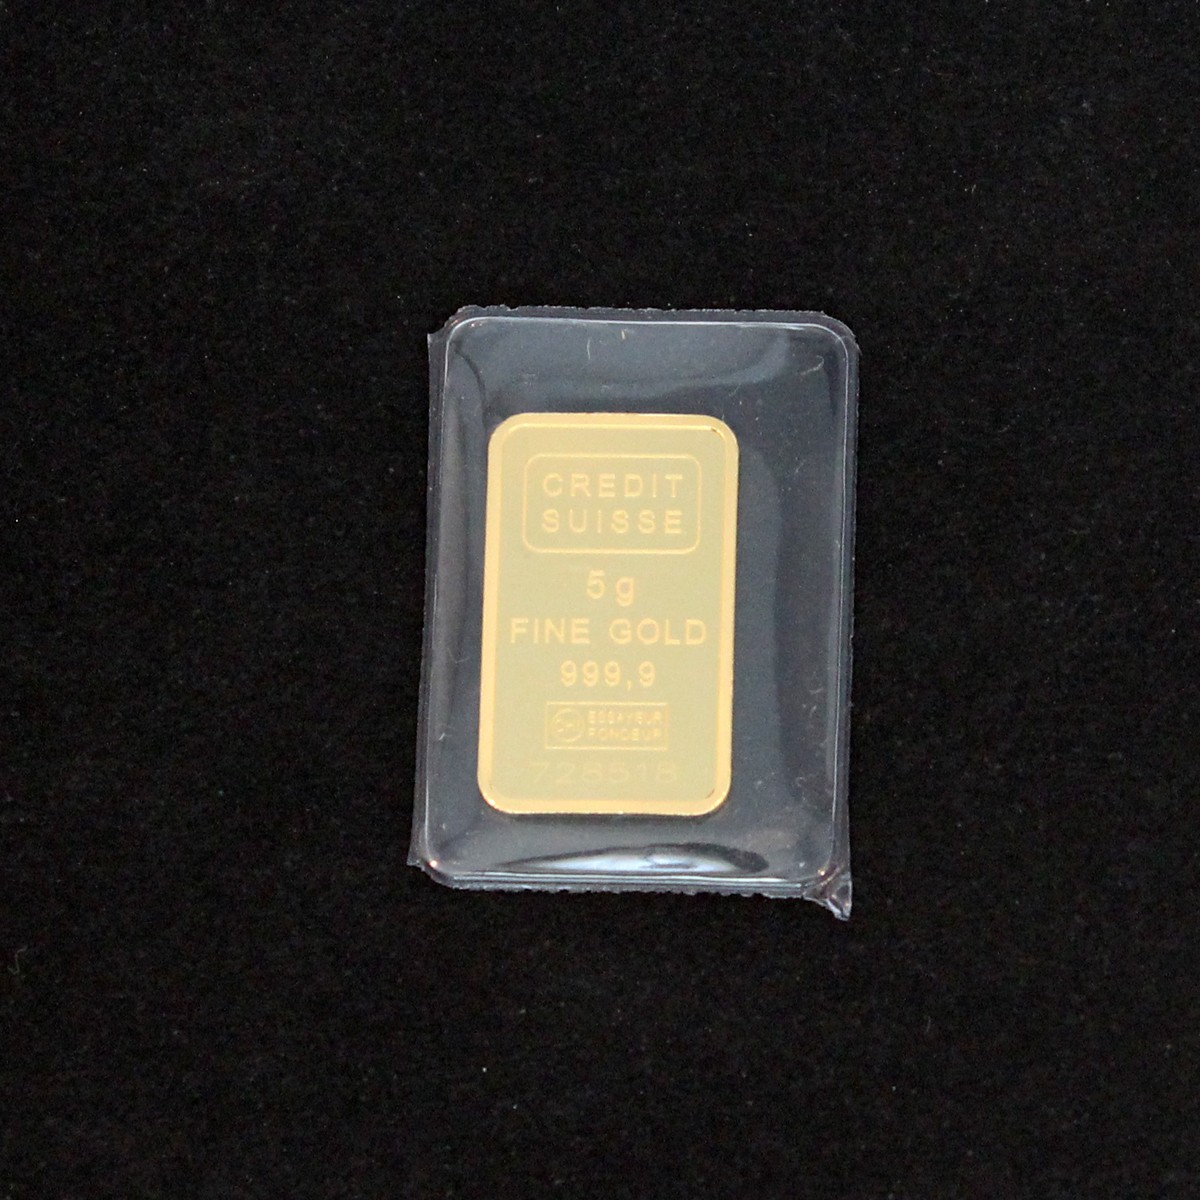 [ free shipping ]24 gold original gold in gotoINGOT [CREDIT_SUISSE original gold in goto5g] Gold bar Liberty coin 